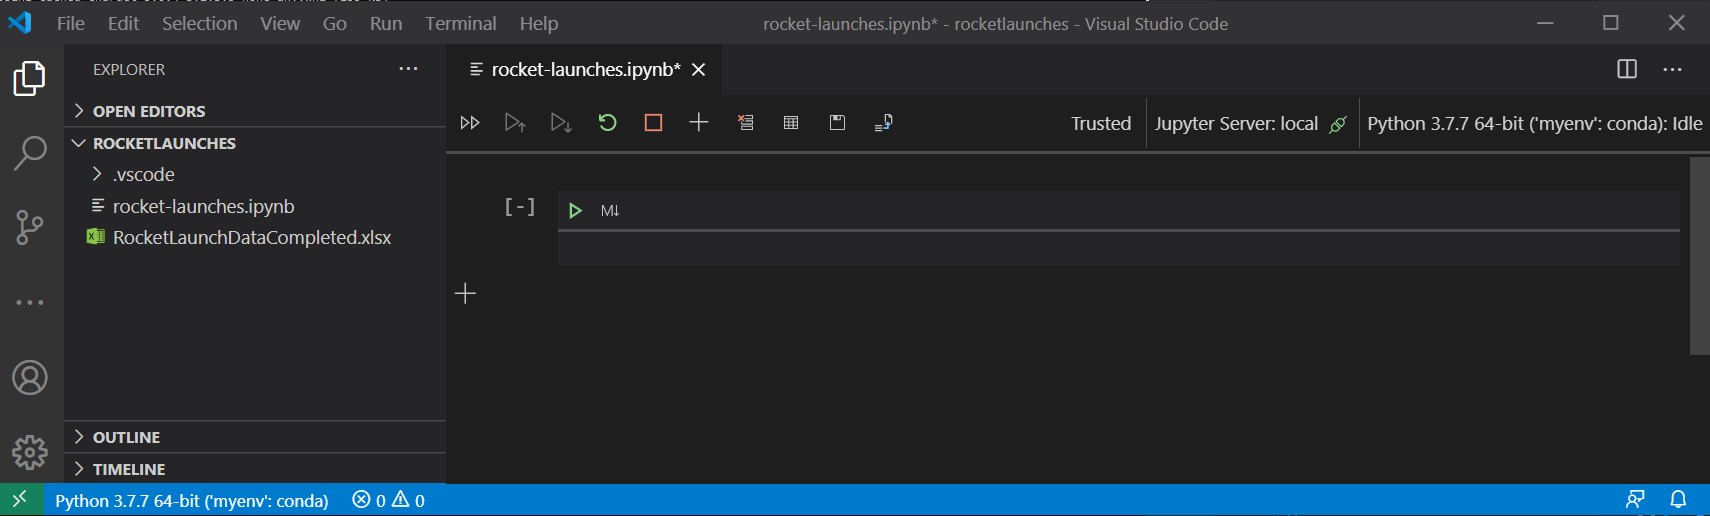 Screenshot that shows Visual Studio Code with the Anaconda environment.